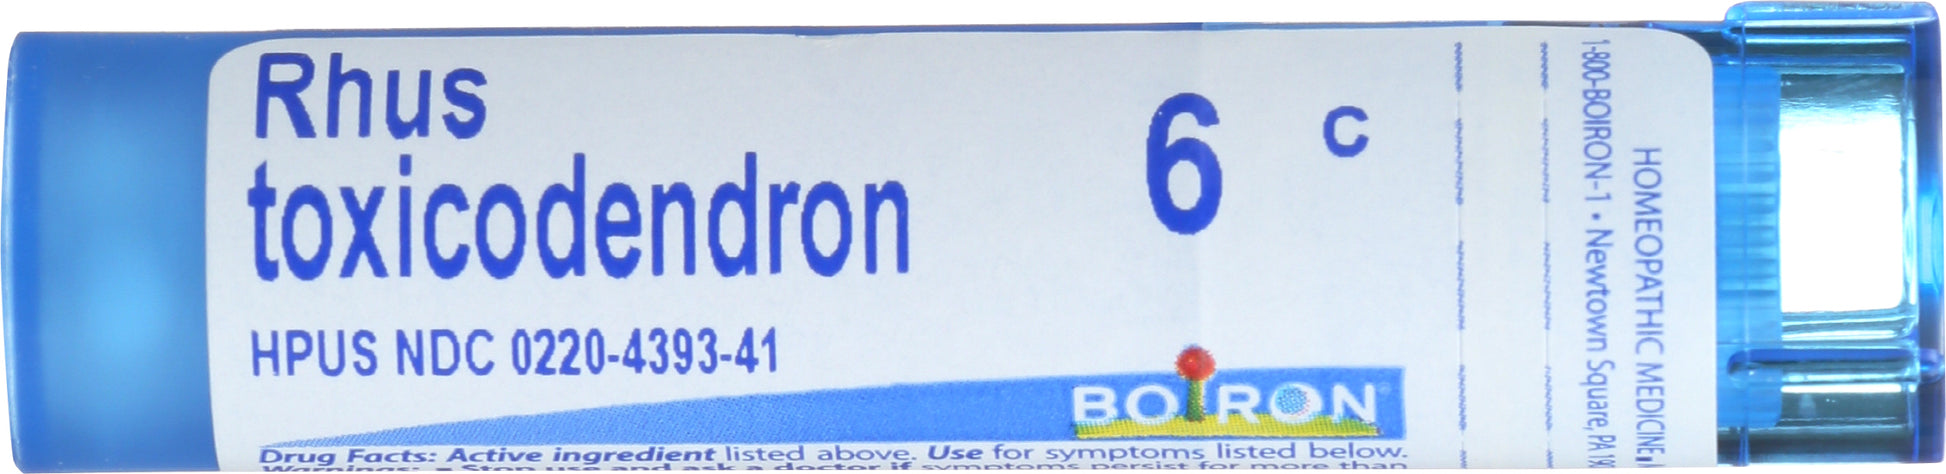 Boiron Rhus tox 6c